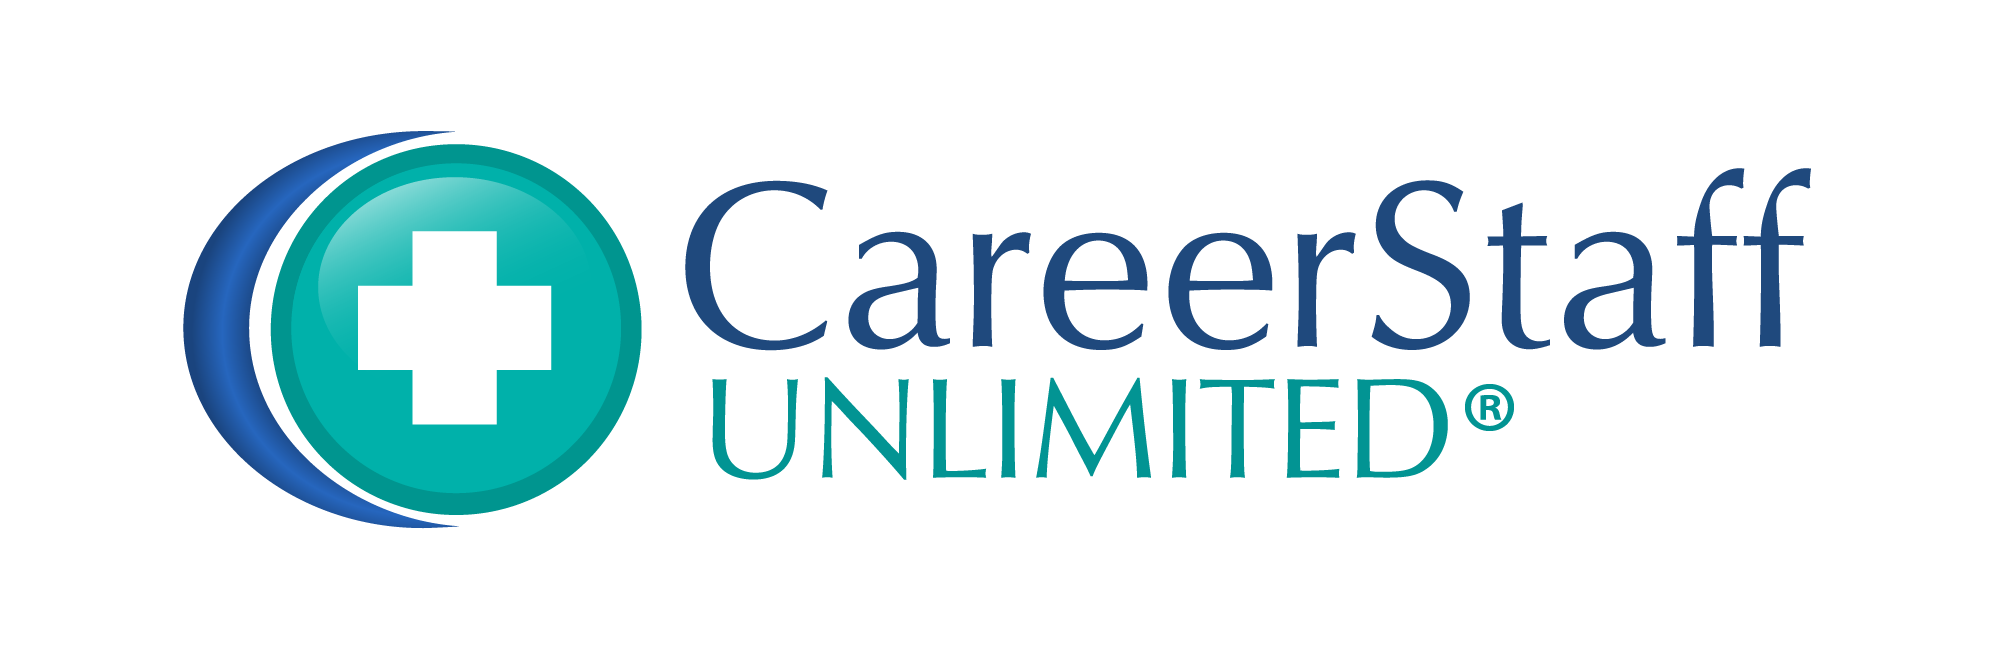 Career Staff Unlimited